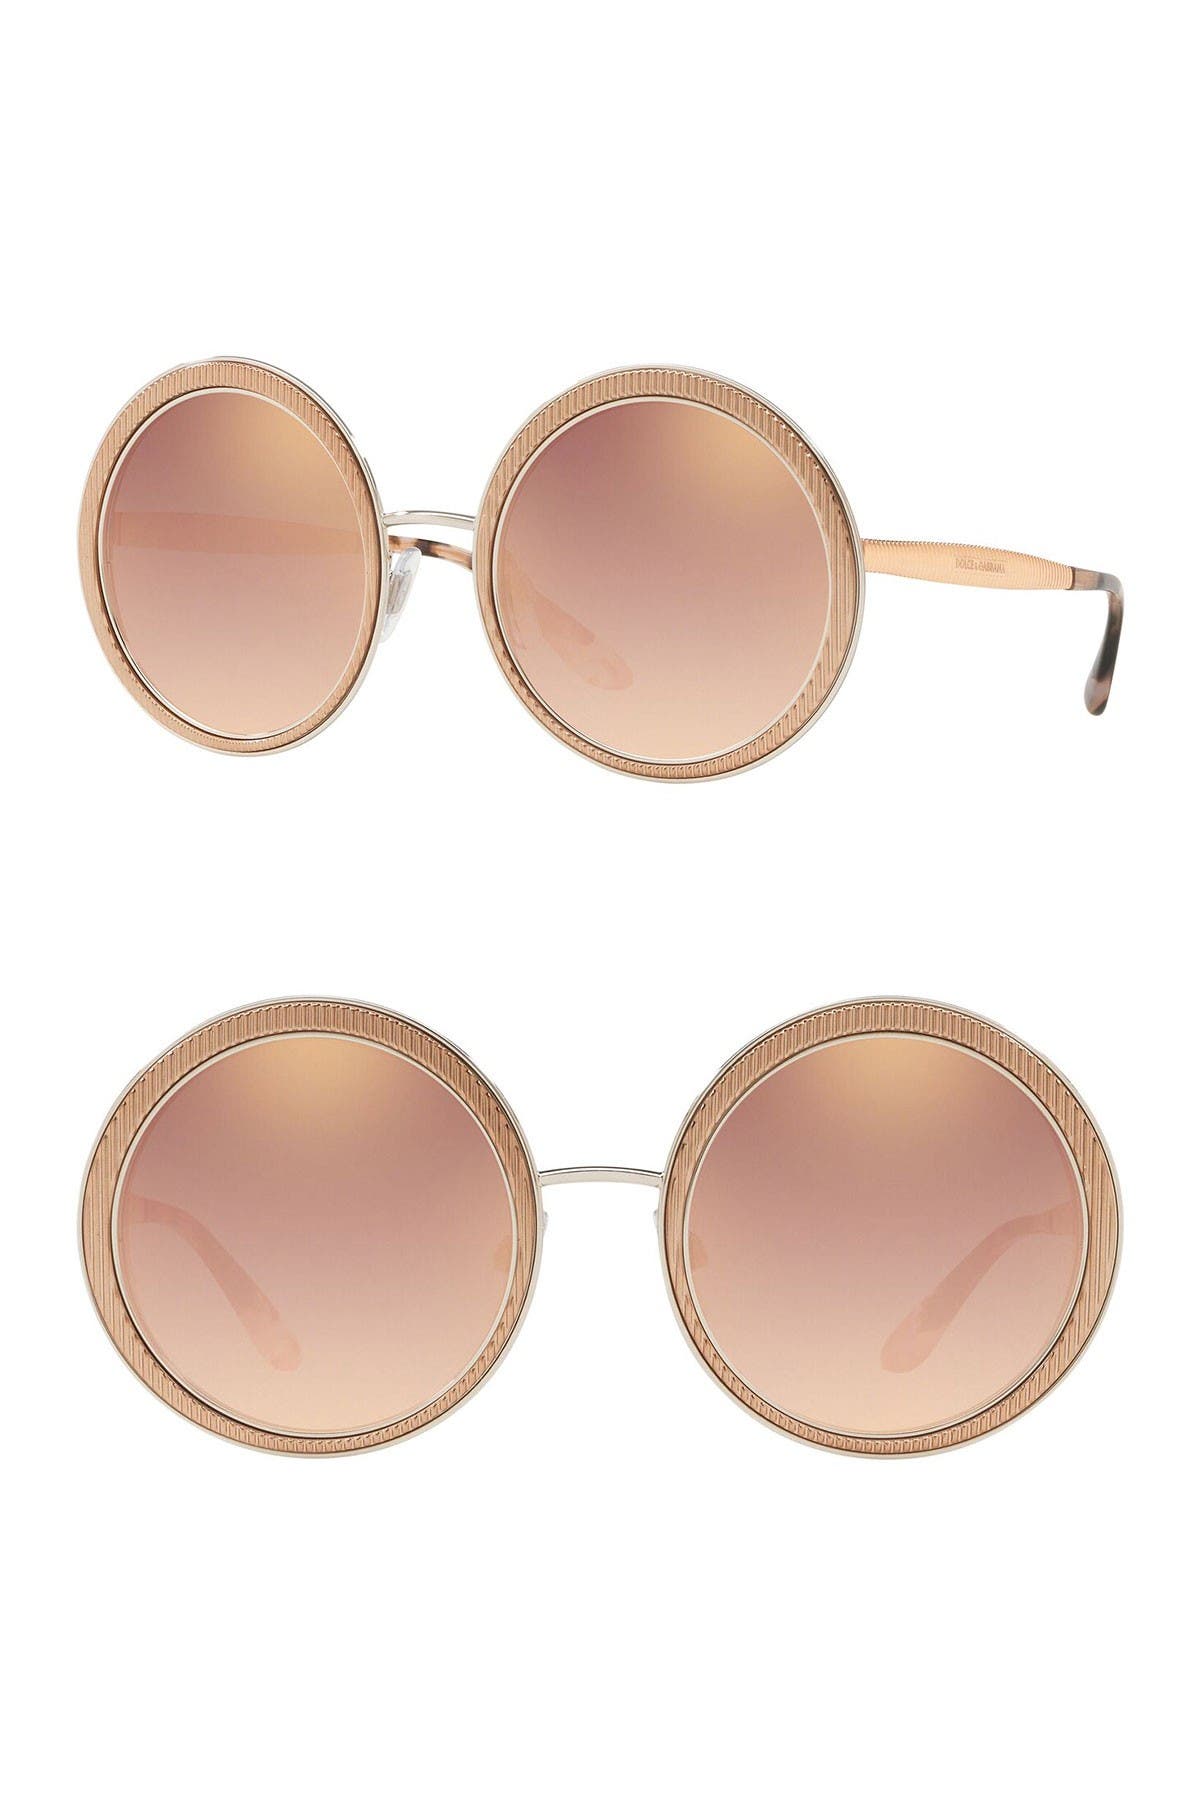 Dolce \u0026 Gabbana | 54mm Round Sunglasses 